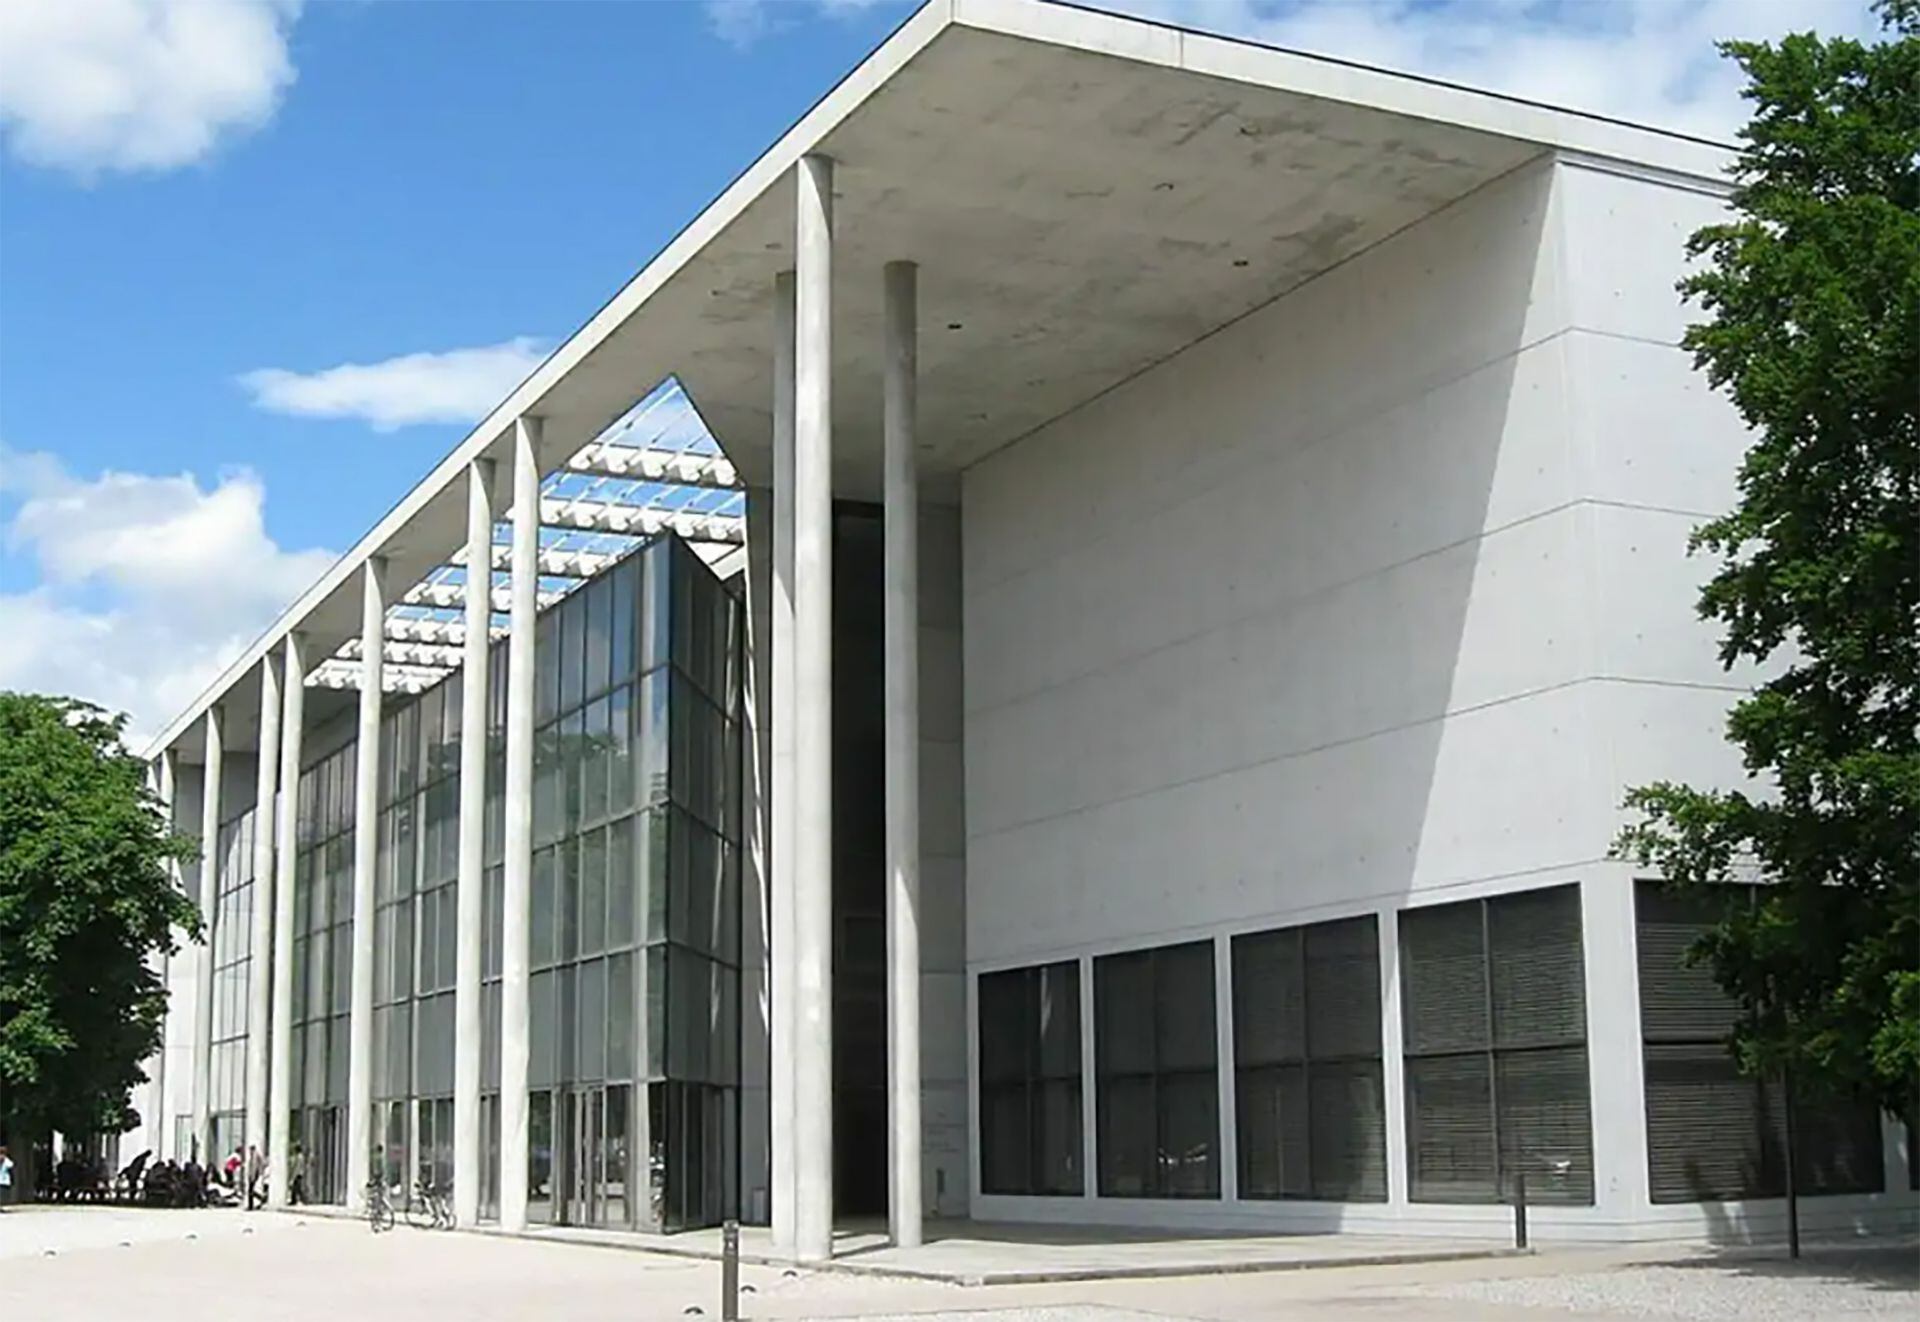 Pinakothek der Moderne Munich